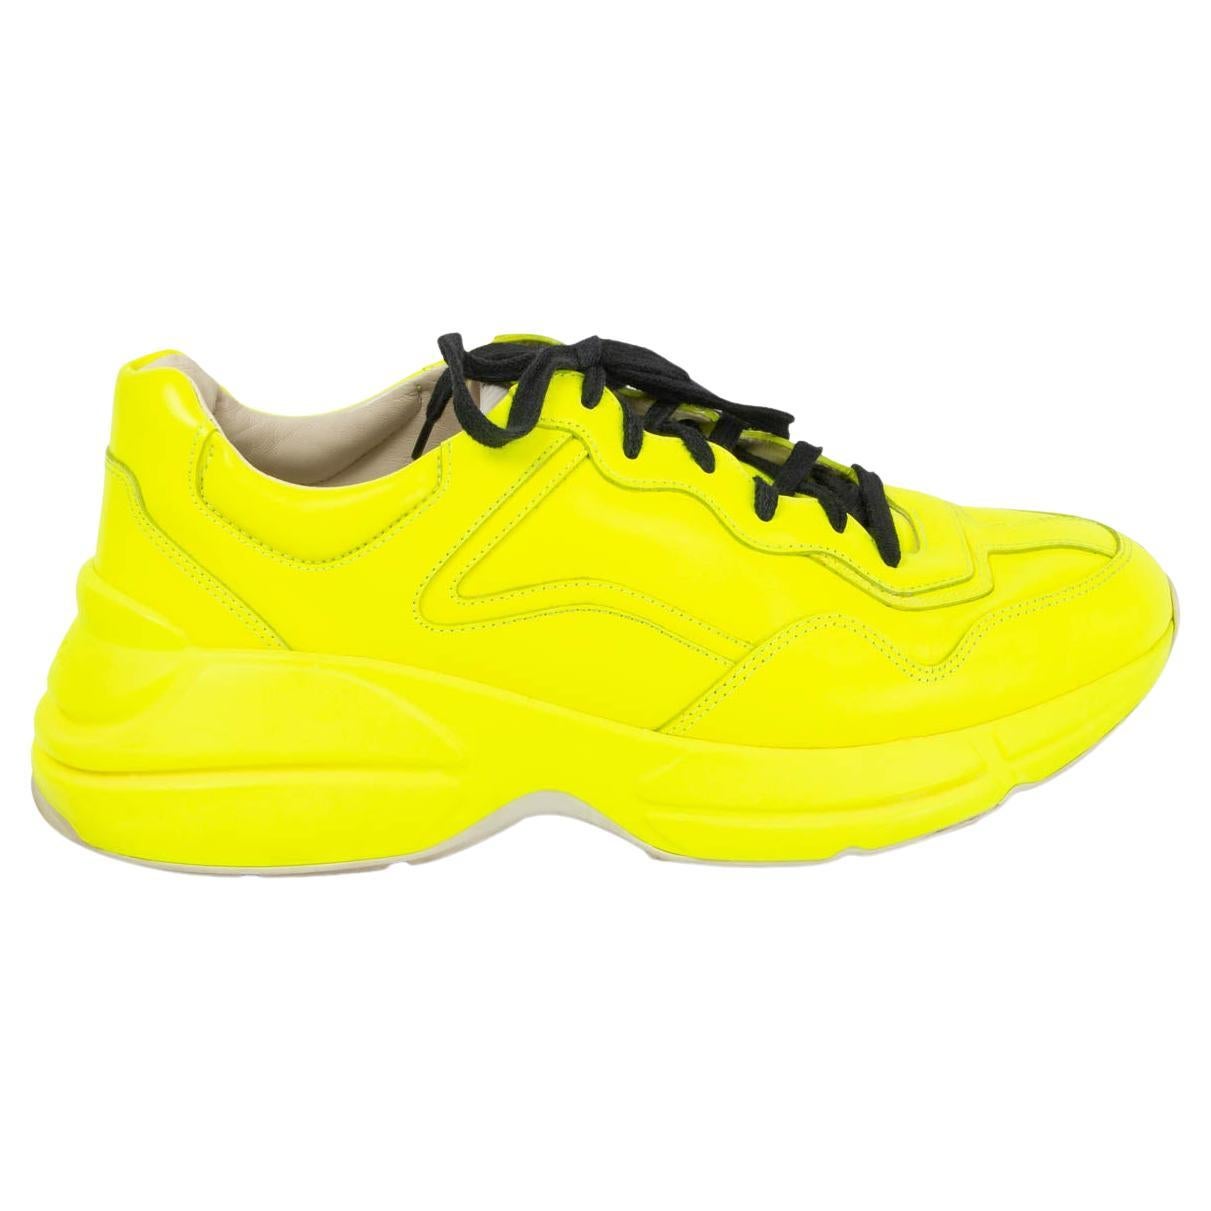 GUCCI cuir jaune fluo RYTHON Baskets Chaussures 8 42 (hommes) ou 40 (femmes)